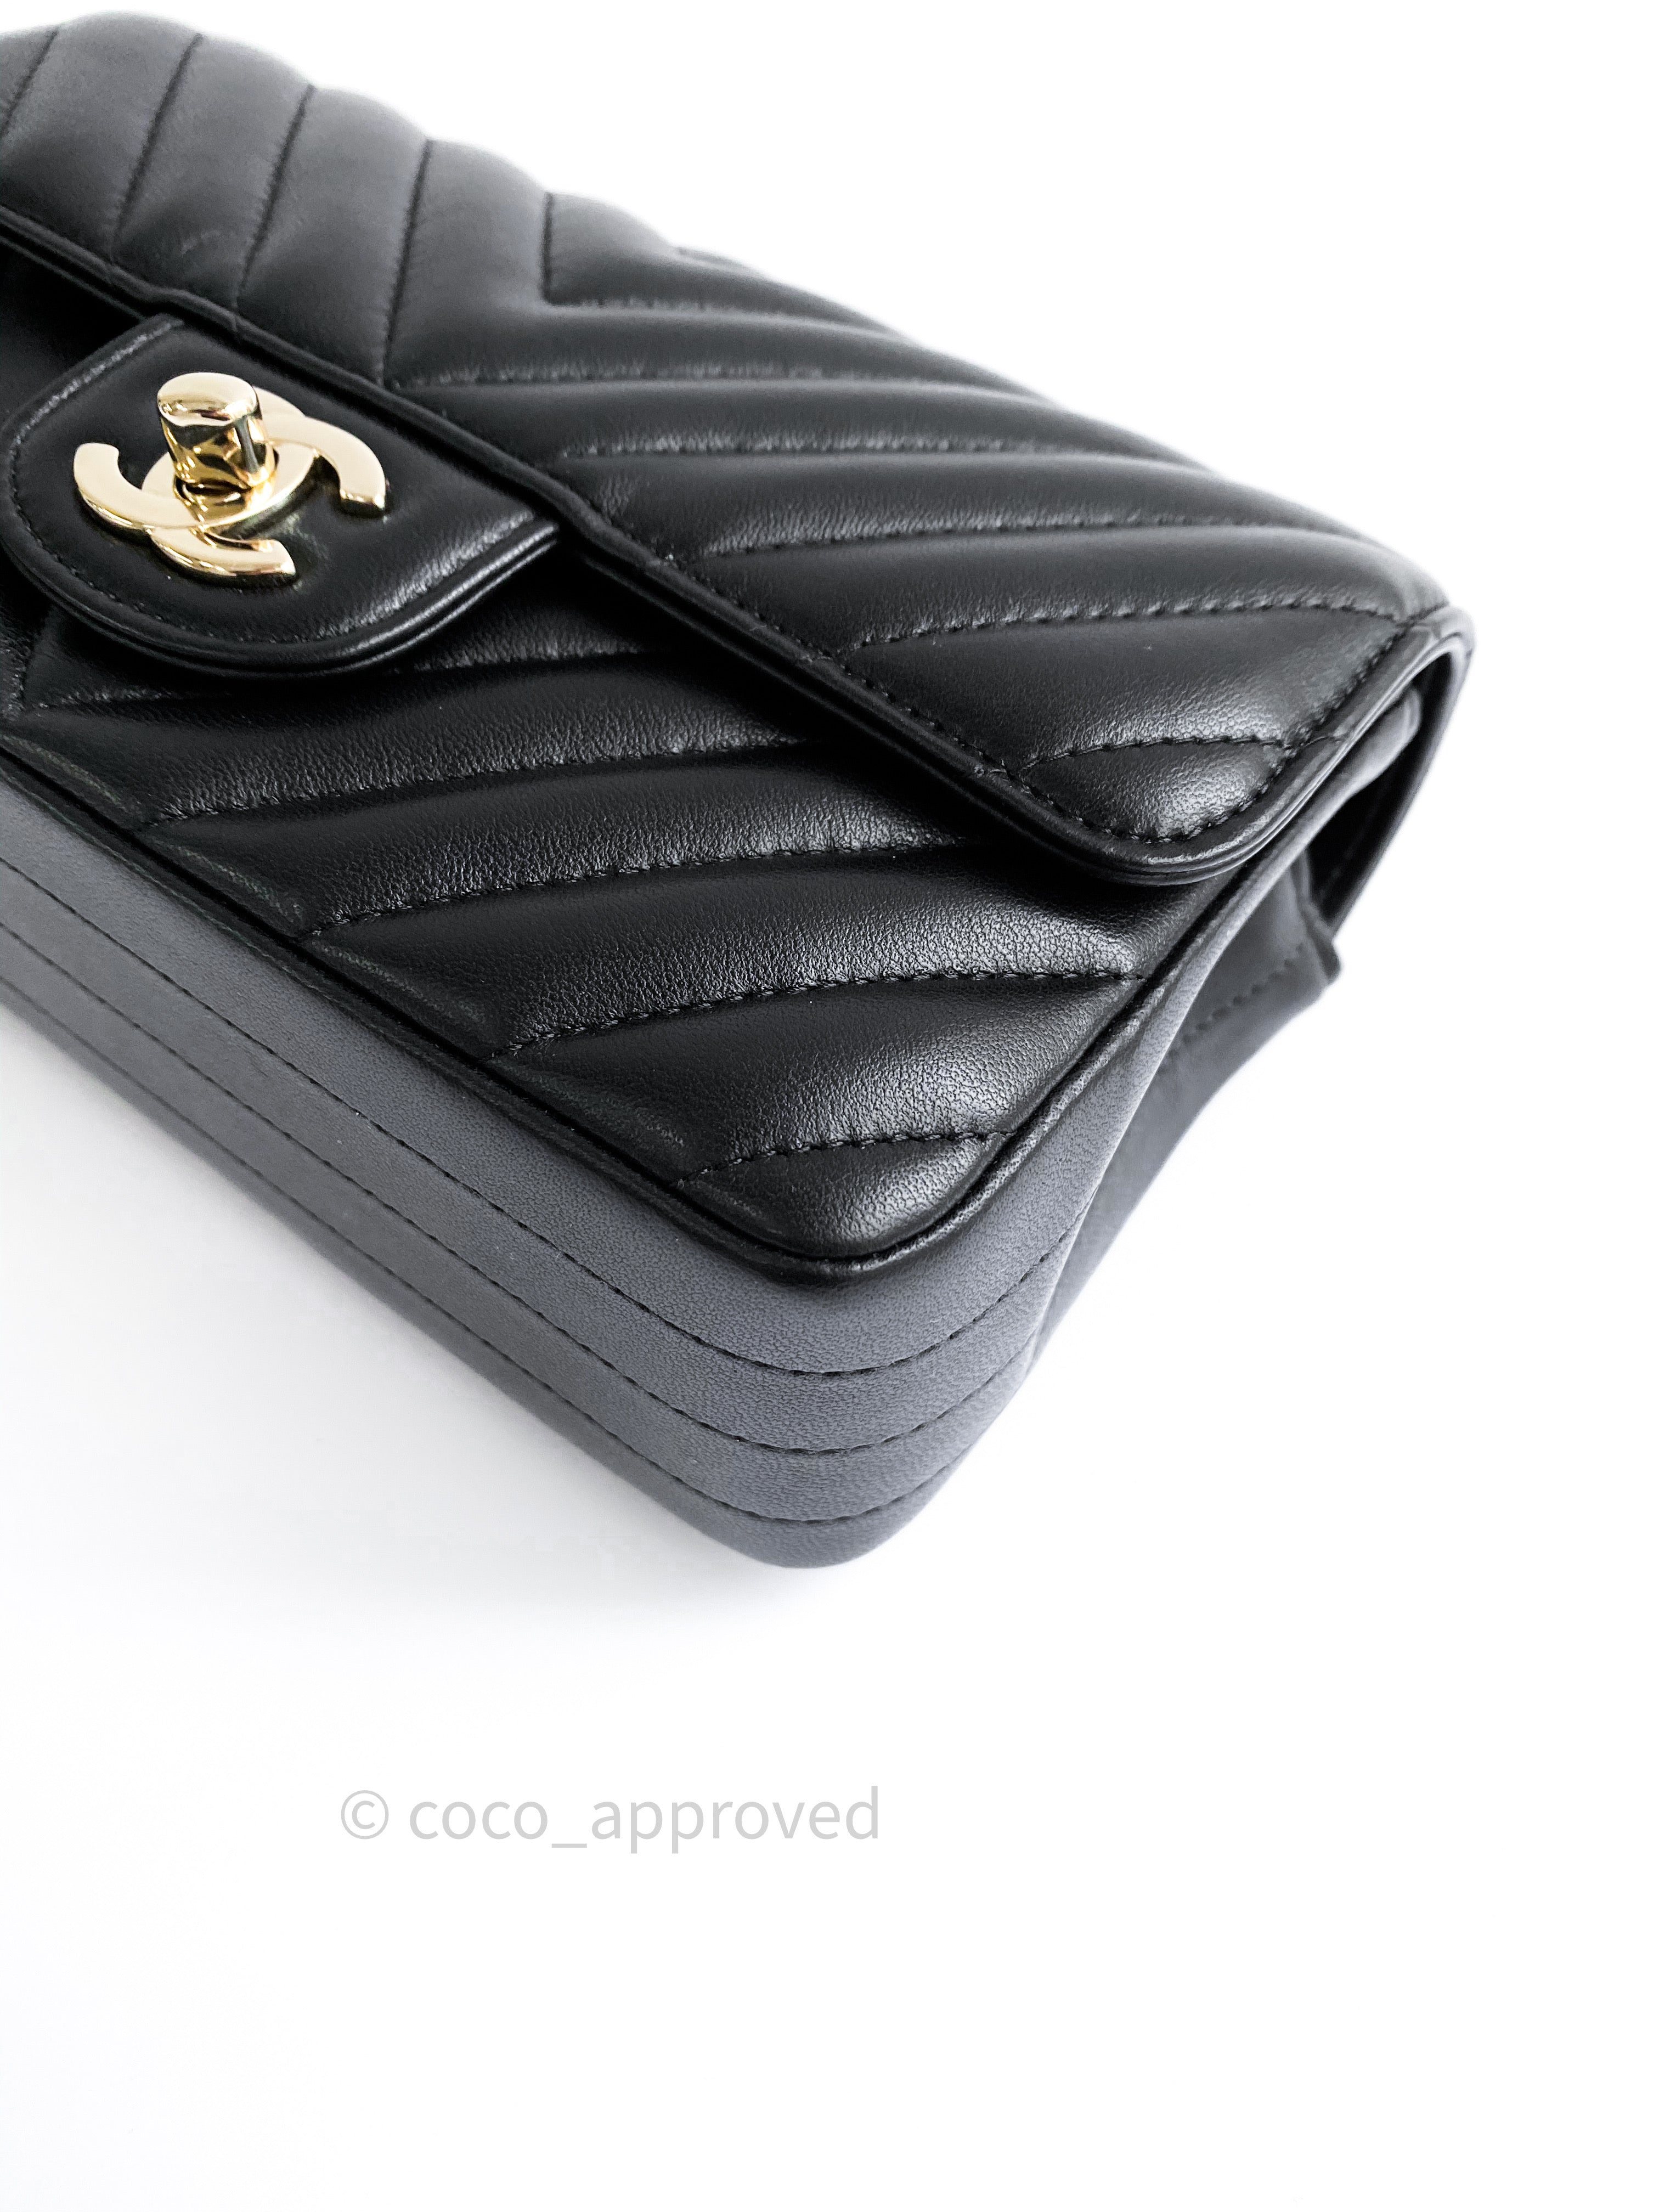 Chanel Chevron Mini Rectangular Flap Bag – The Find Studio